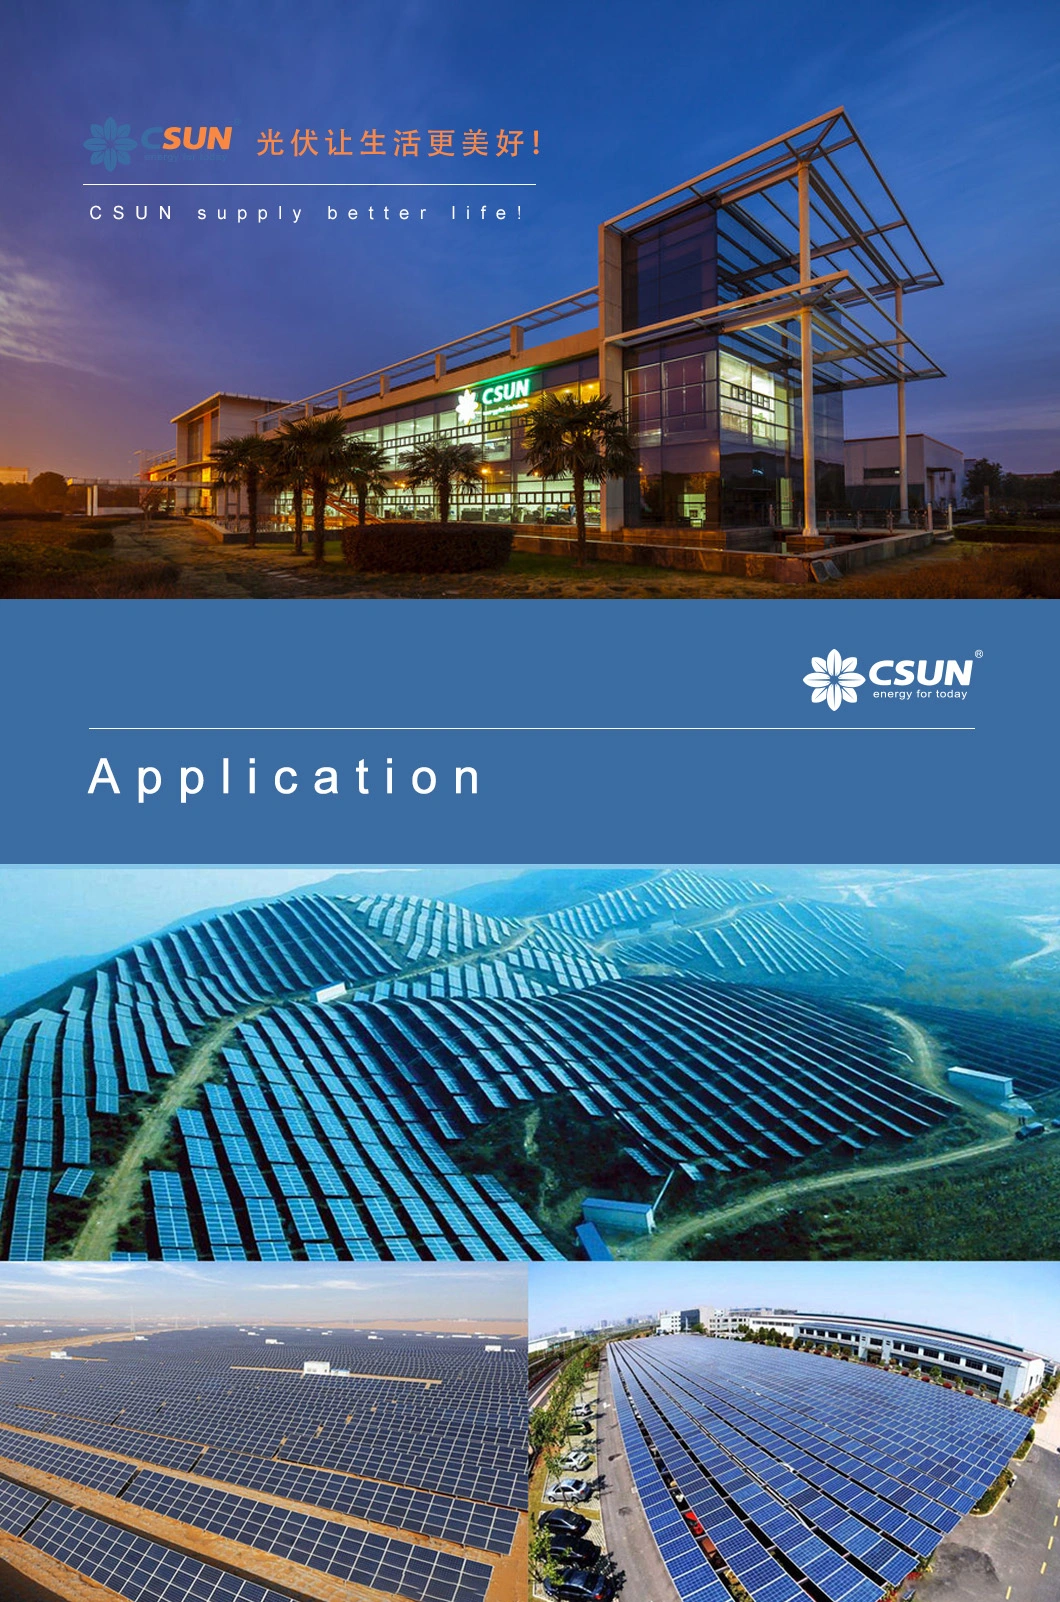 Csun Mono 330W Solar Panel for PV Solar System